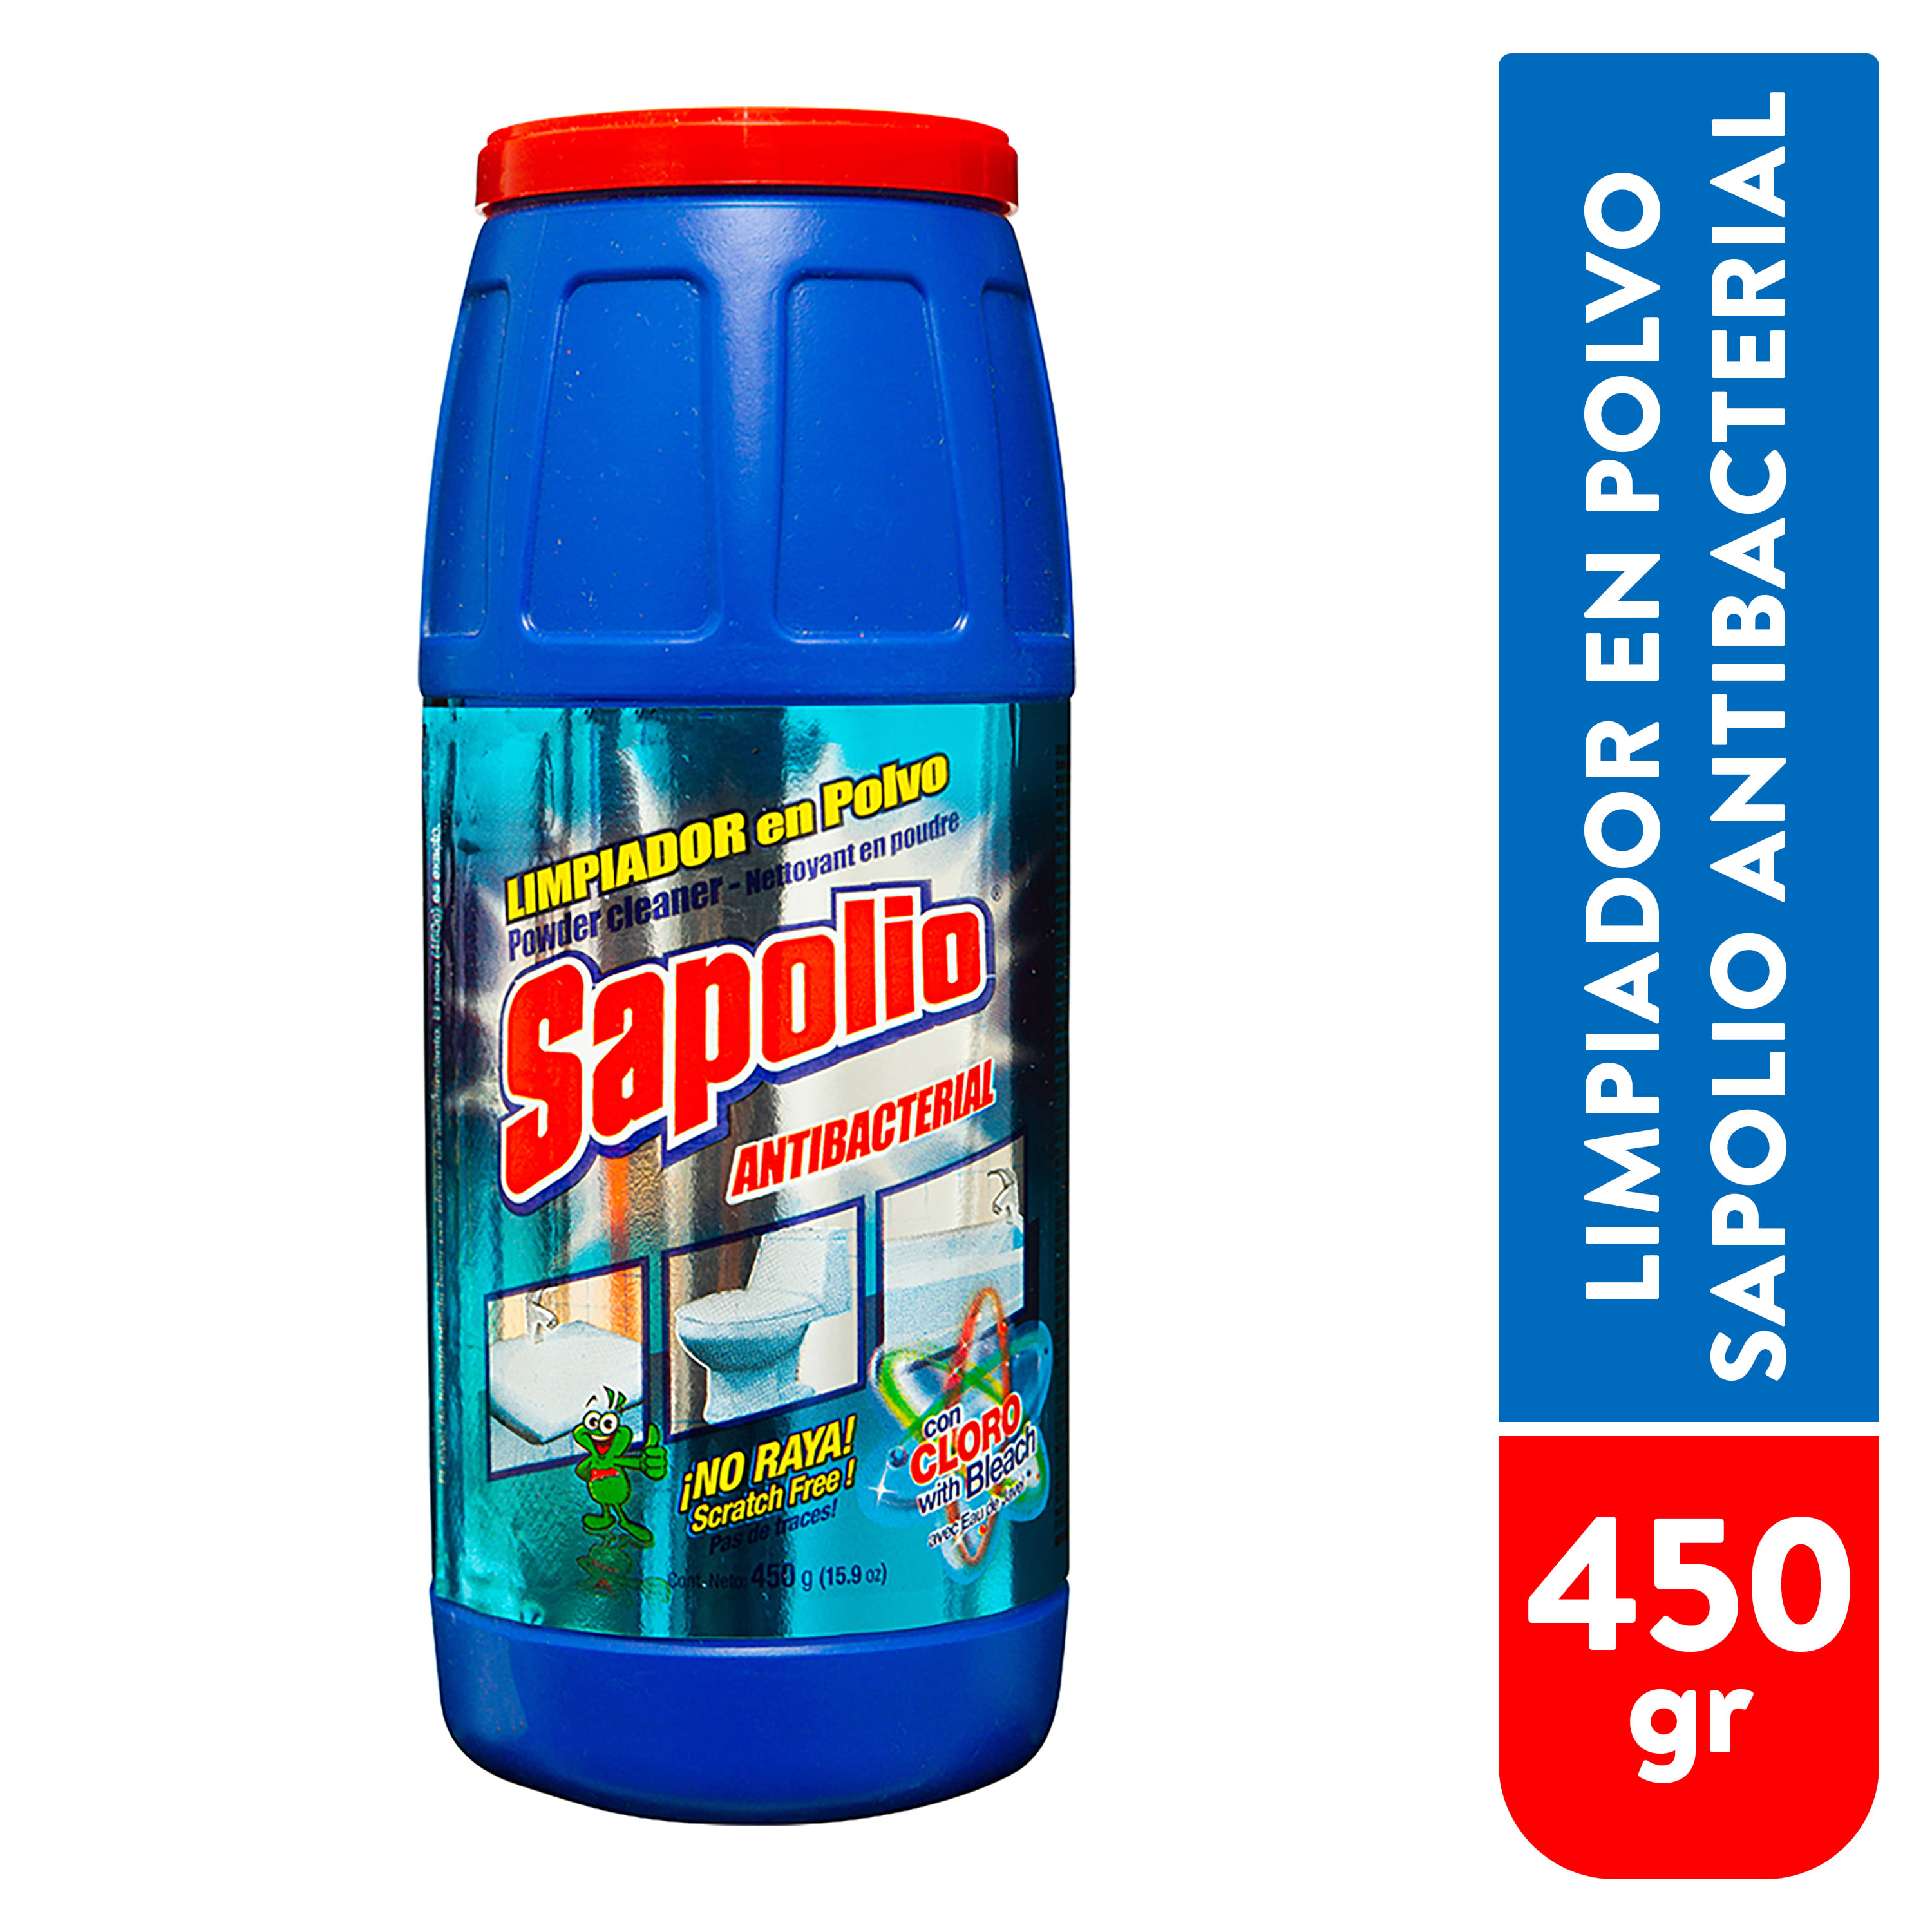 Limpiador-Sapolio-Antibact-Ba-Bote-450Gr-1-13352